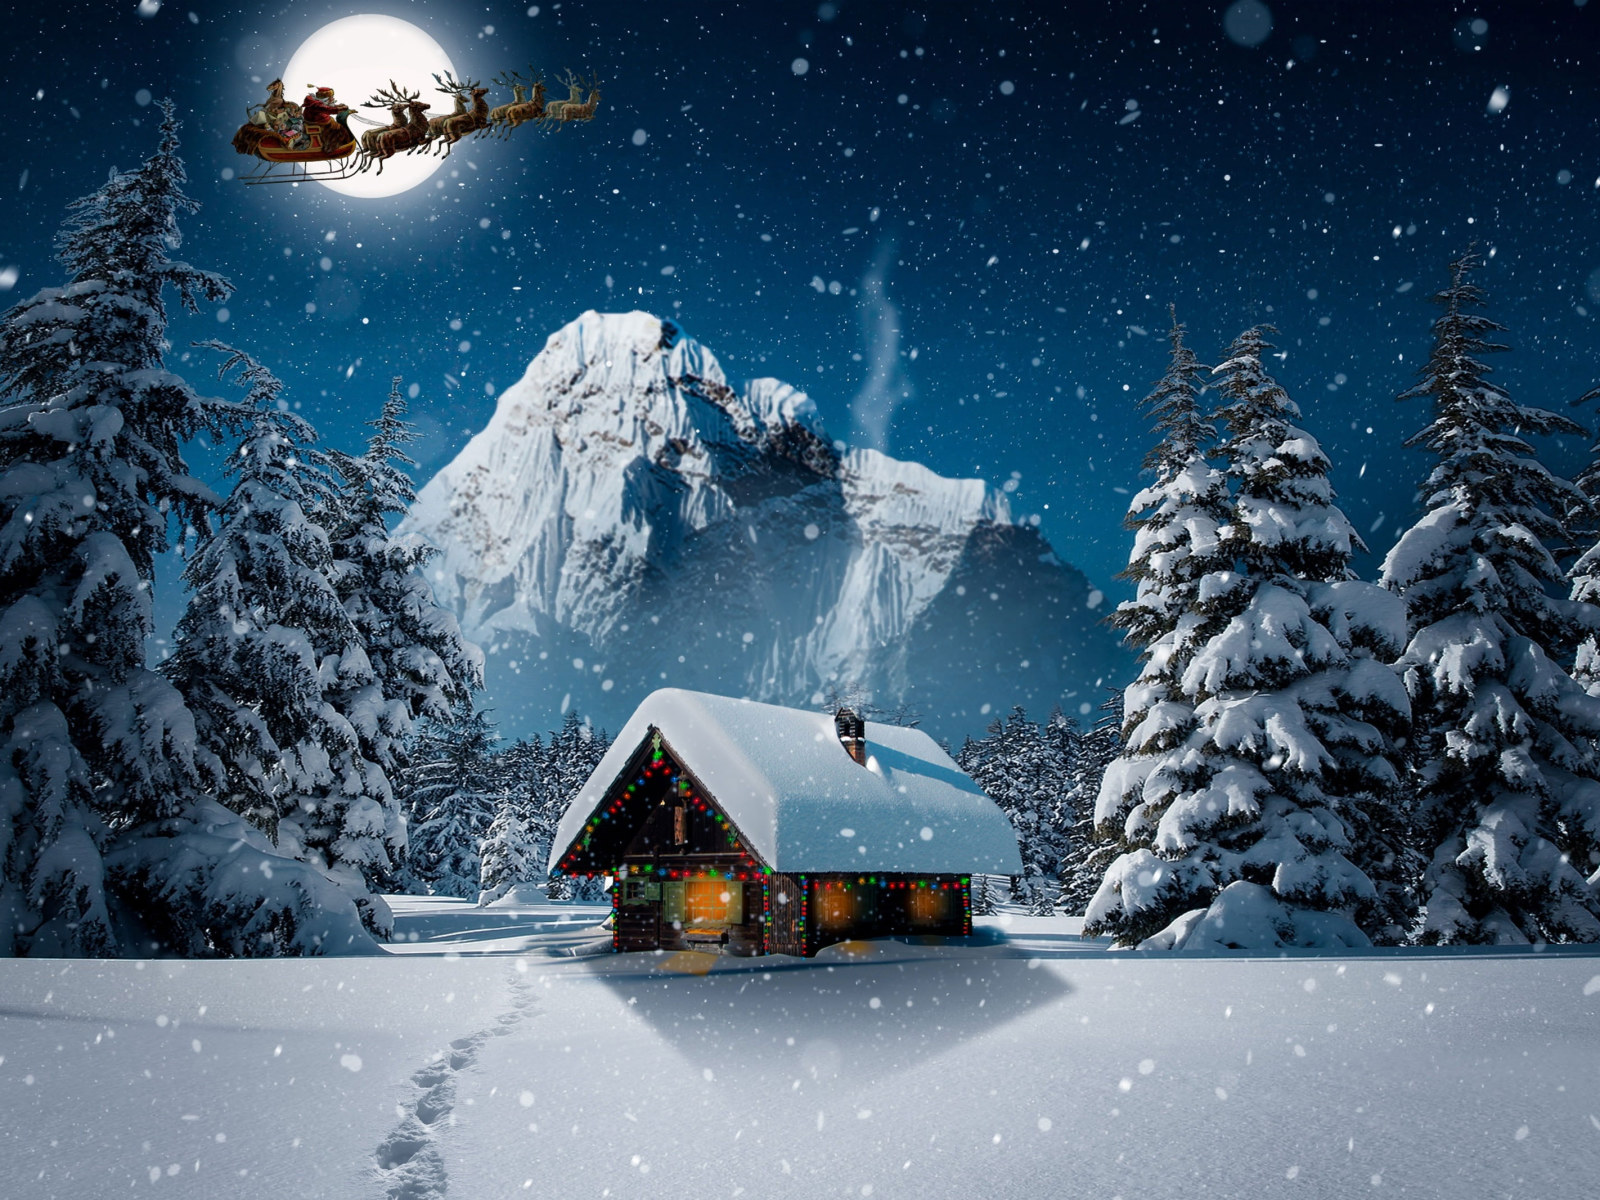 Christmas Winter 4K wallpaper, Holidays, Landscape, Night, Design, Fantasy • Wallpaper For You HD Wallpaper For Desktop & Mobile